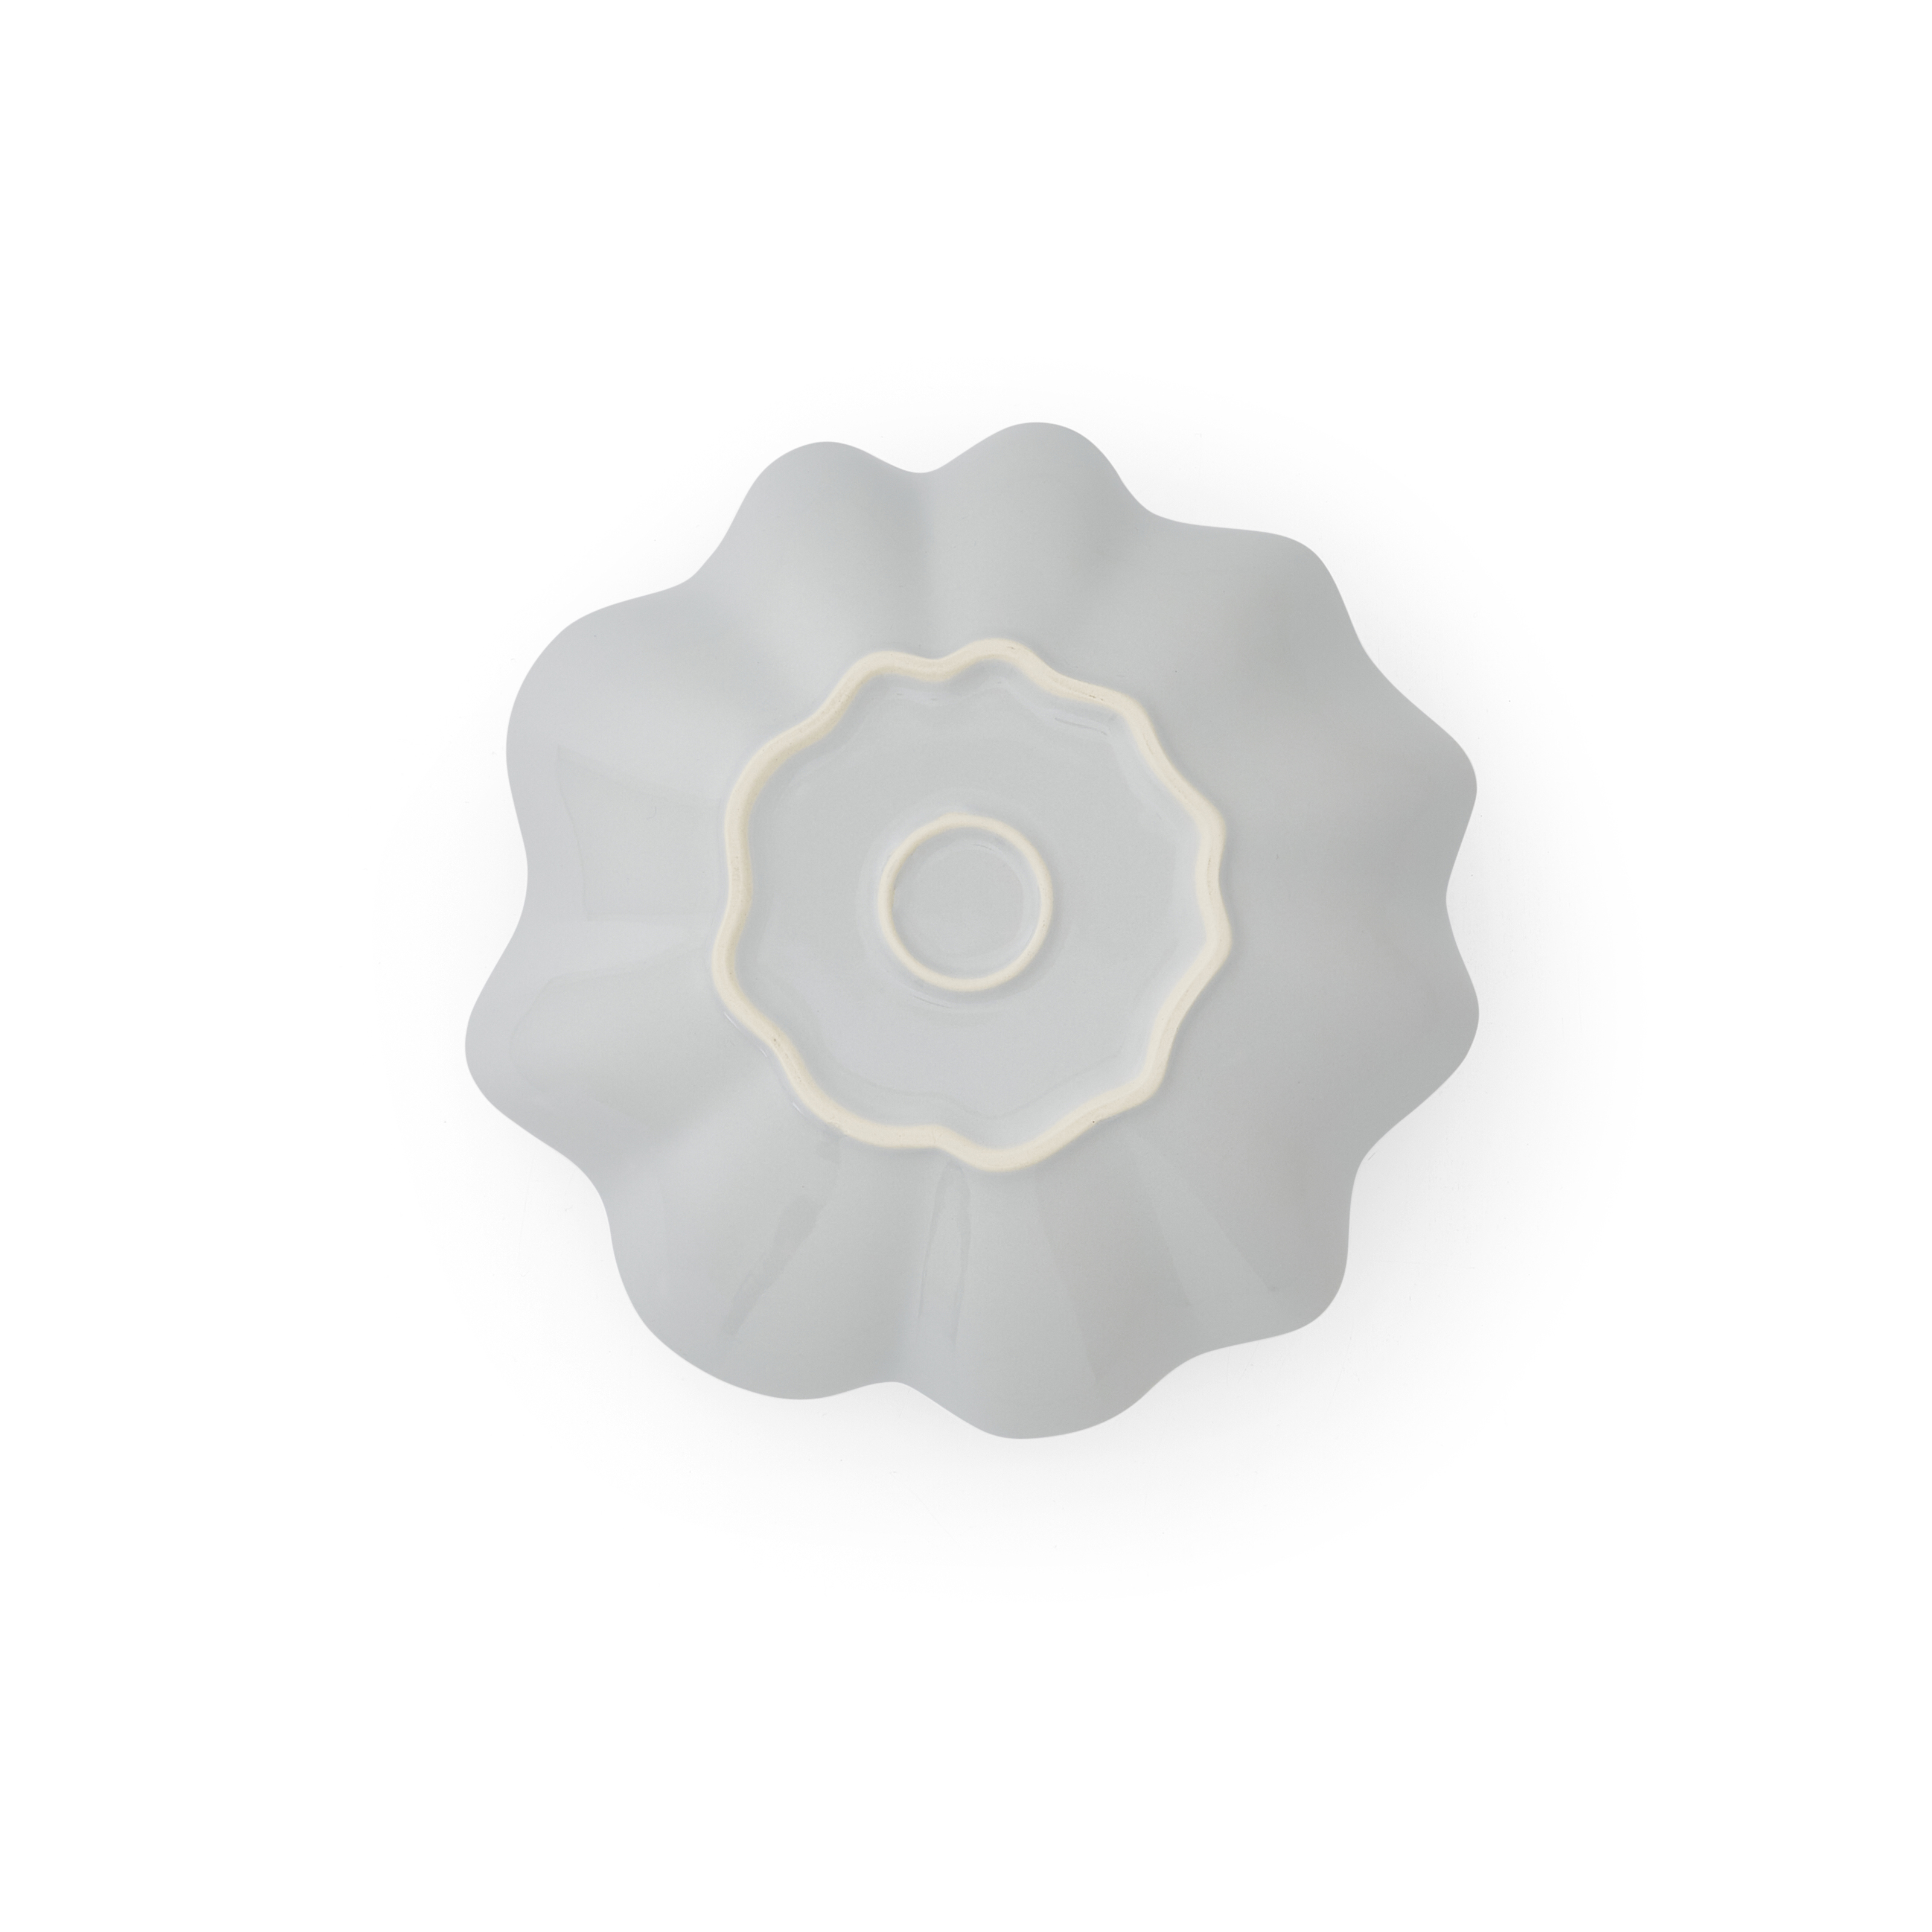 Sophie Conran Floret 9" Pasta Bowl-Dove Grey image number null